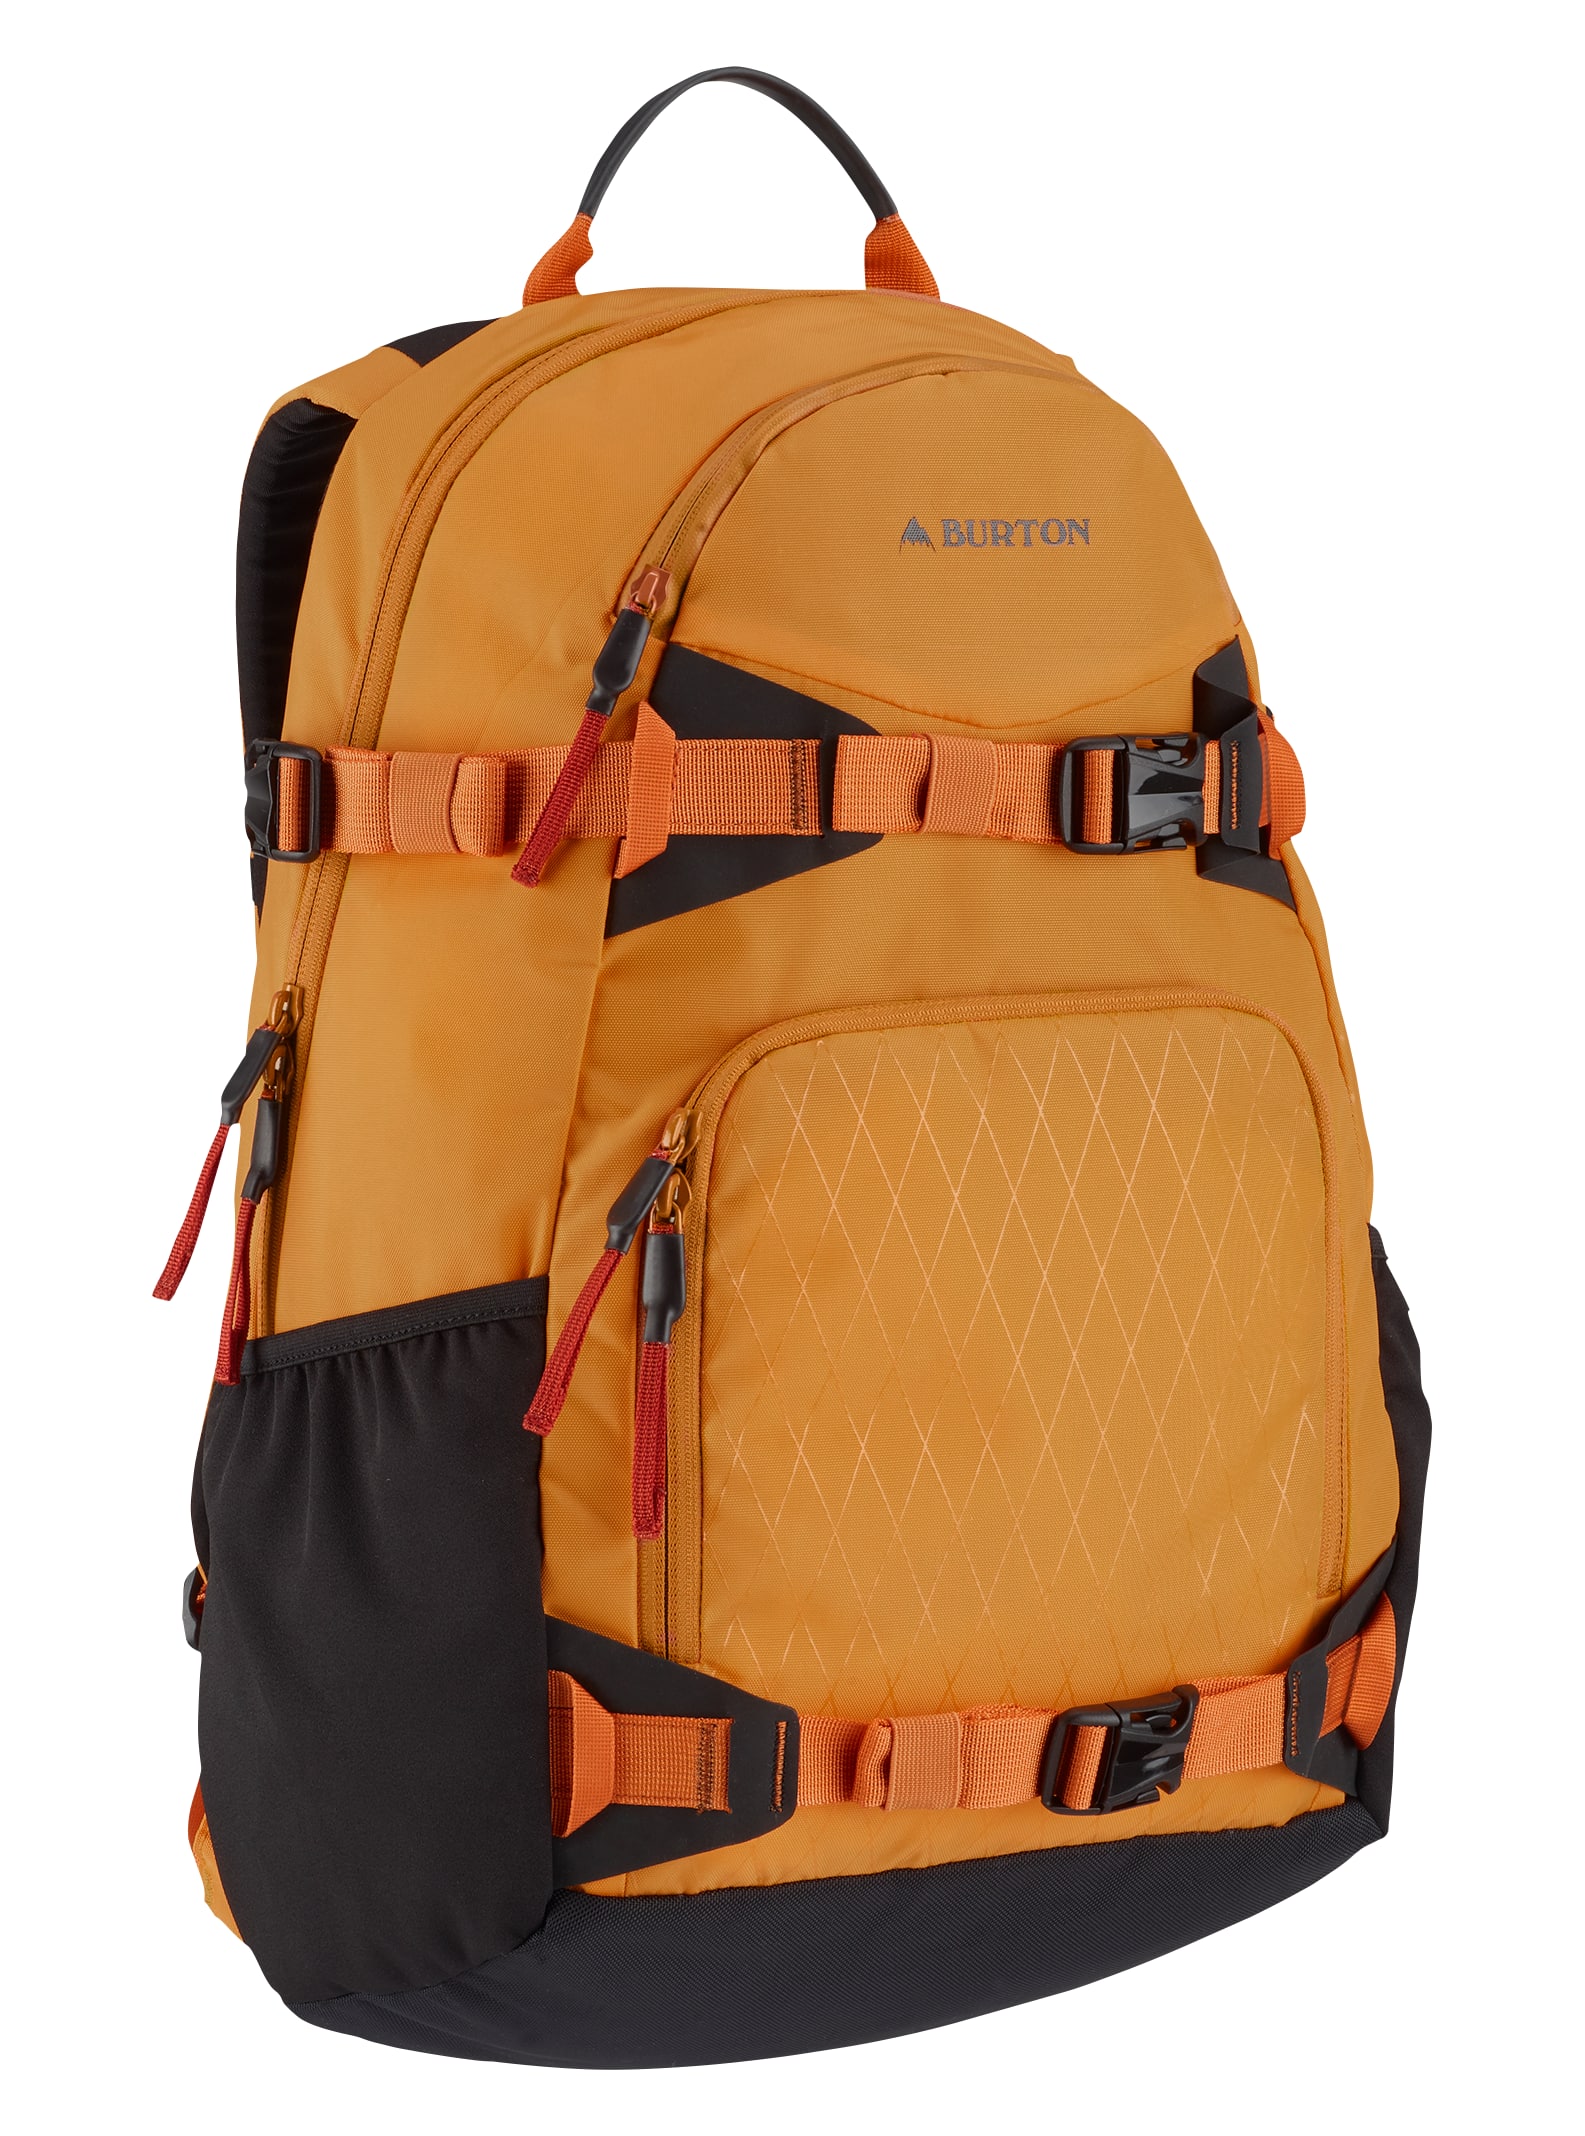 Burton / Rider's 25L Backpack 2.0